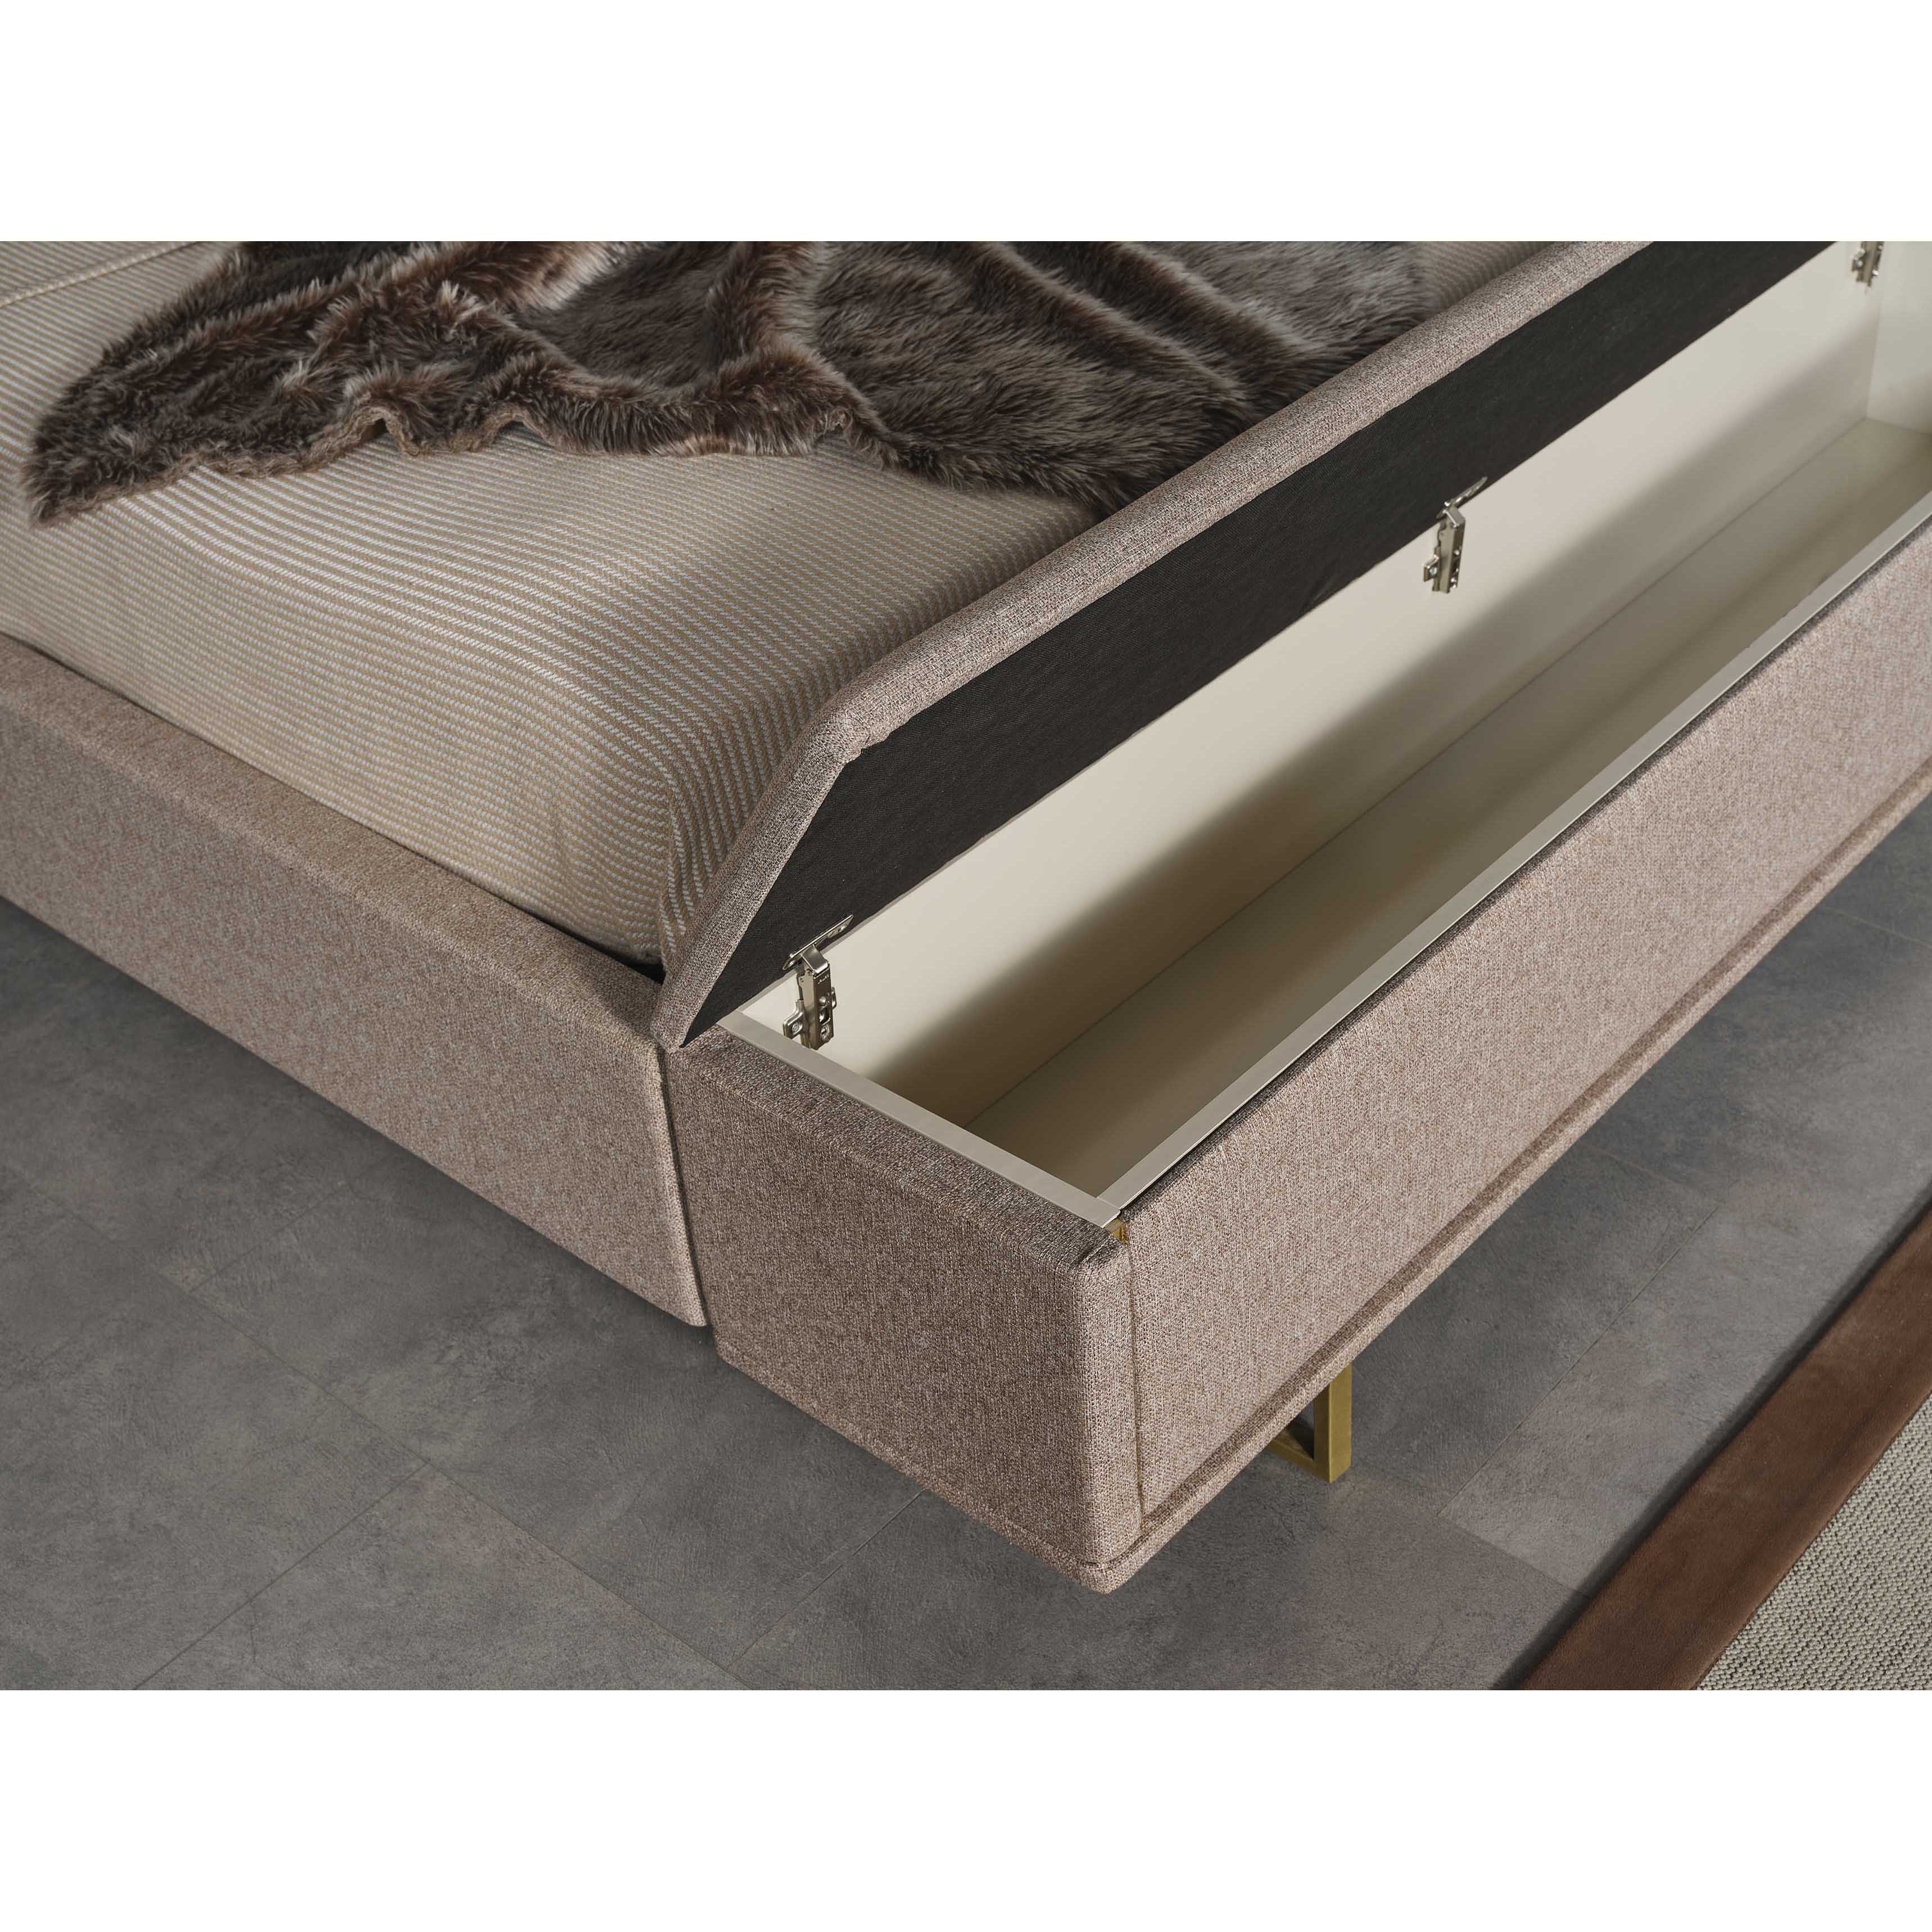 Zirve Bed With Storage 180x200 cm